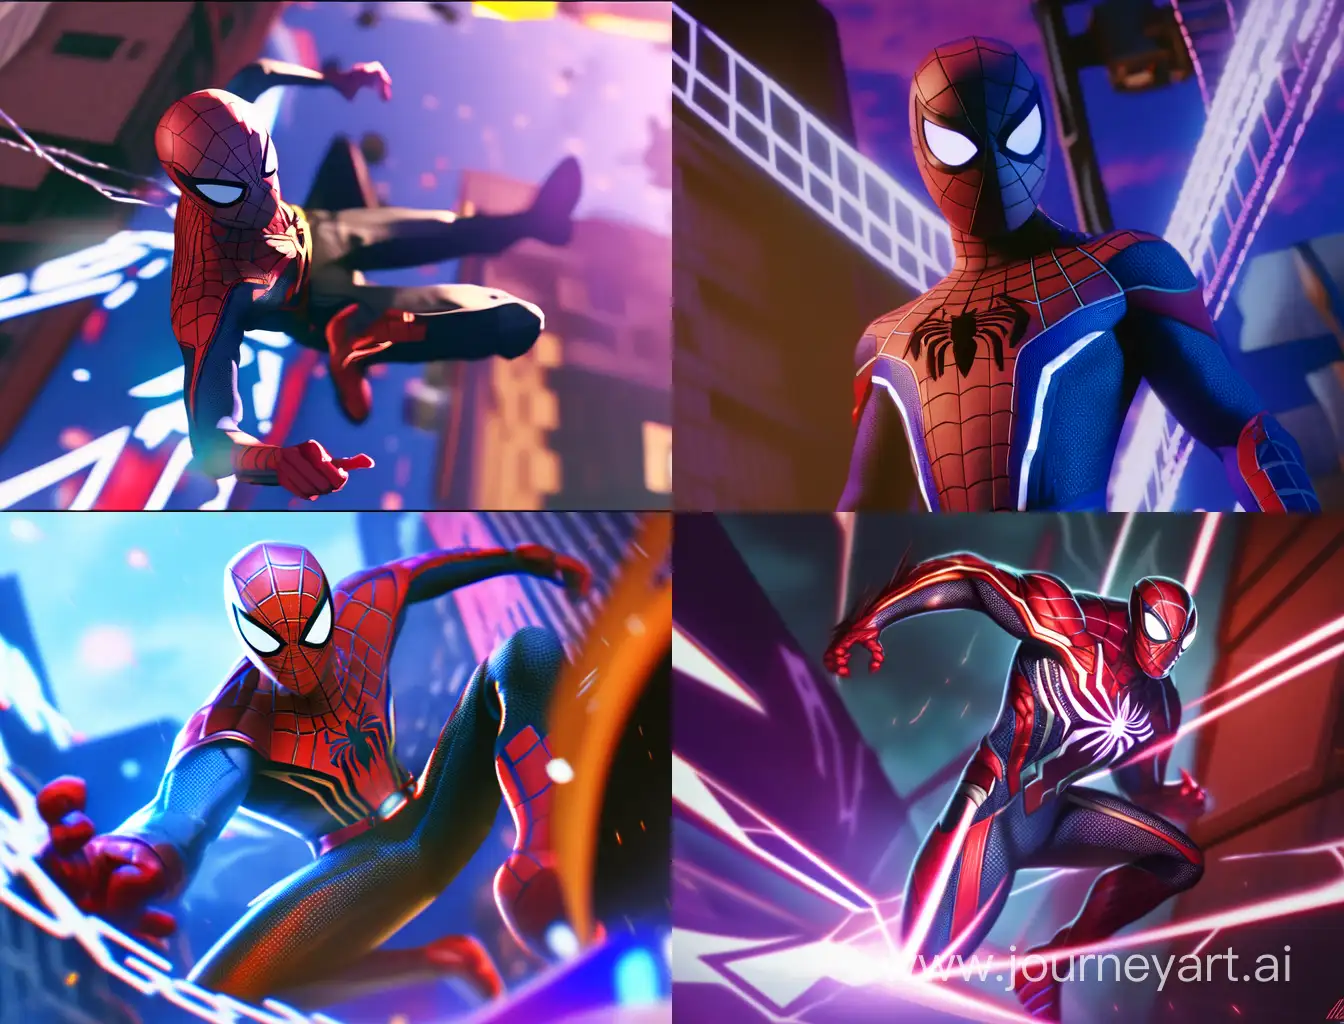 SpiderMan-Swinging-Through-Neon-Cityscape-in-Stunning-4K-Resolution